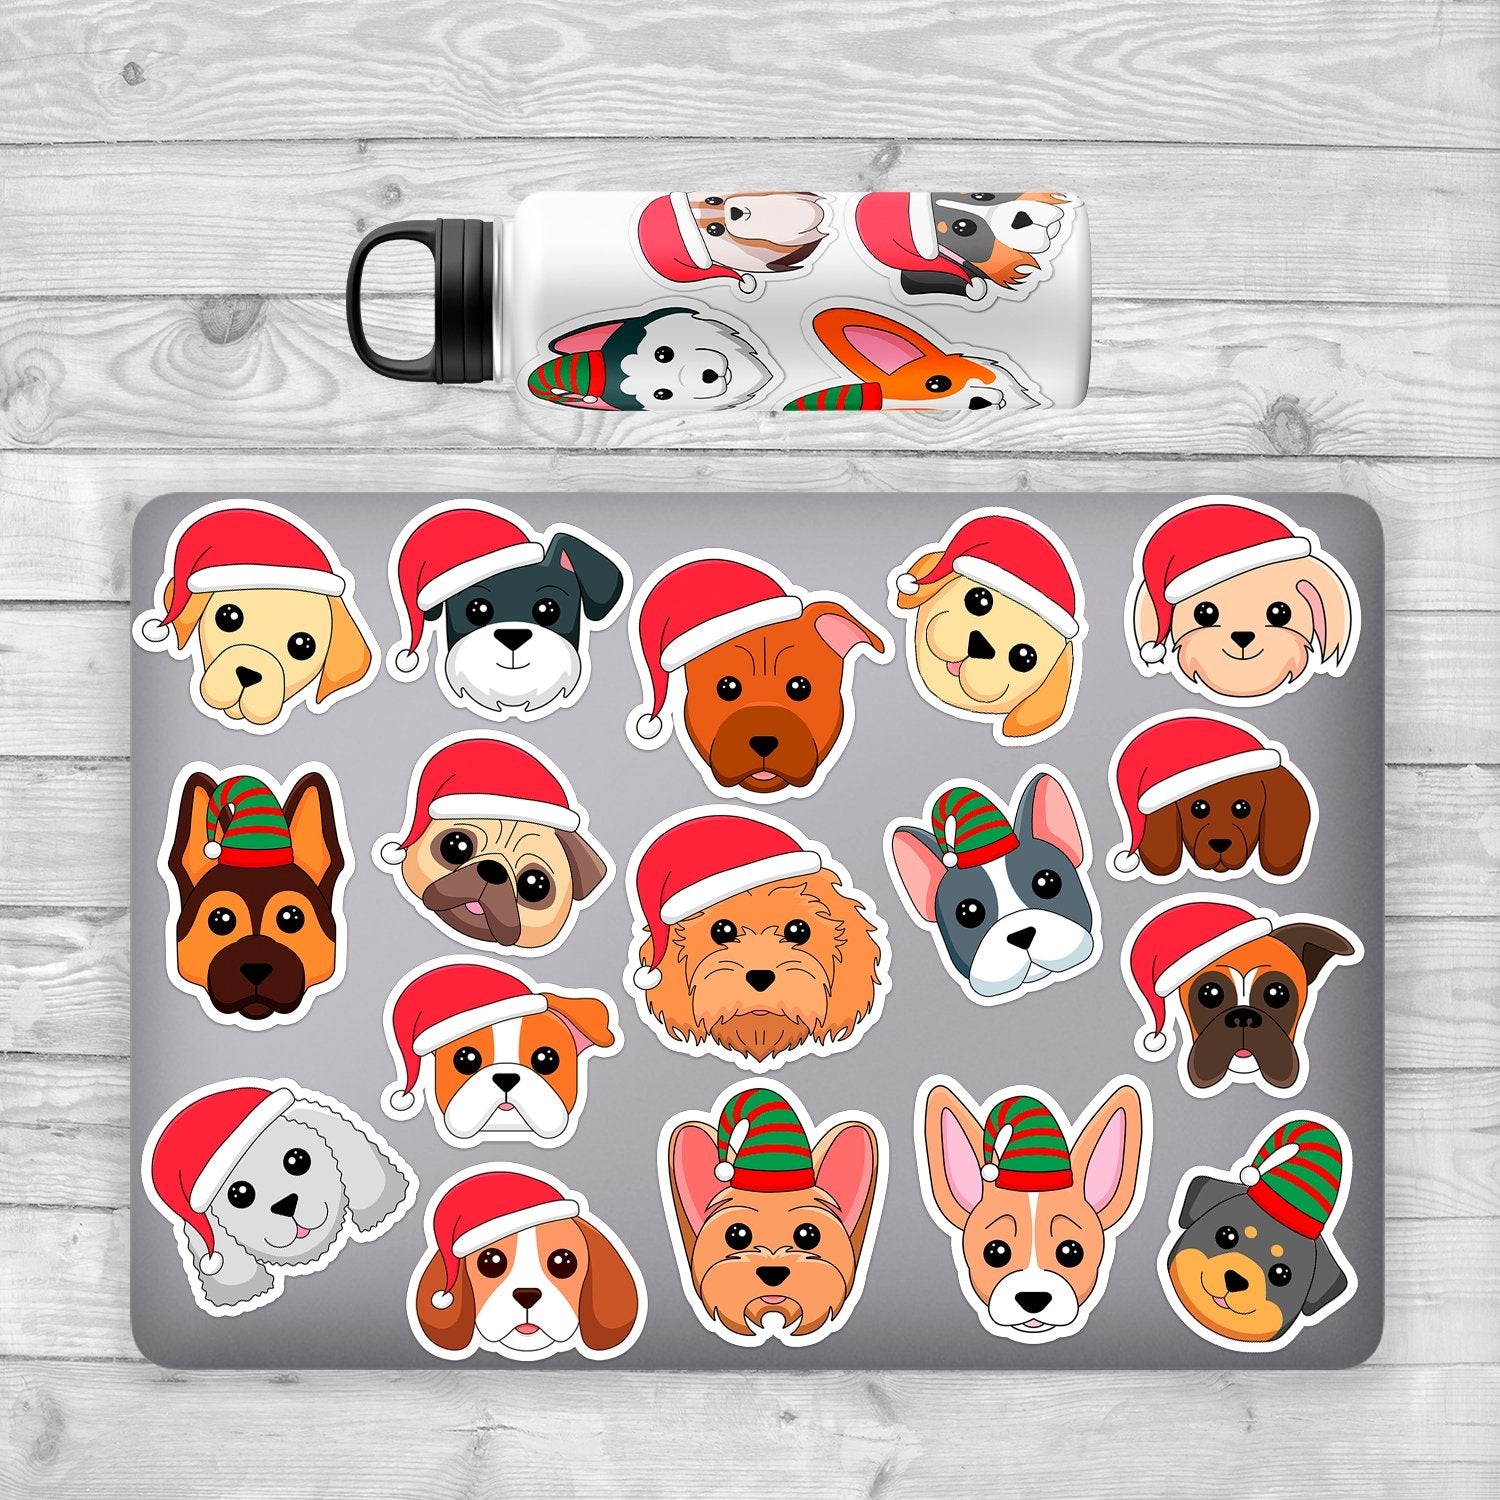 Labrador Retriever Chocolate Sticker - Christmas Santa Hat - Dogstickers.co